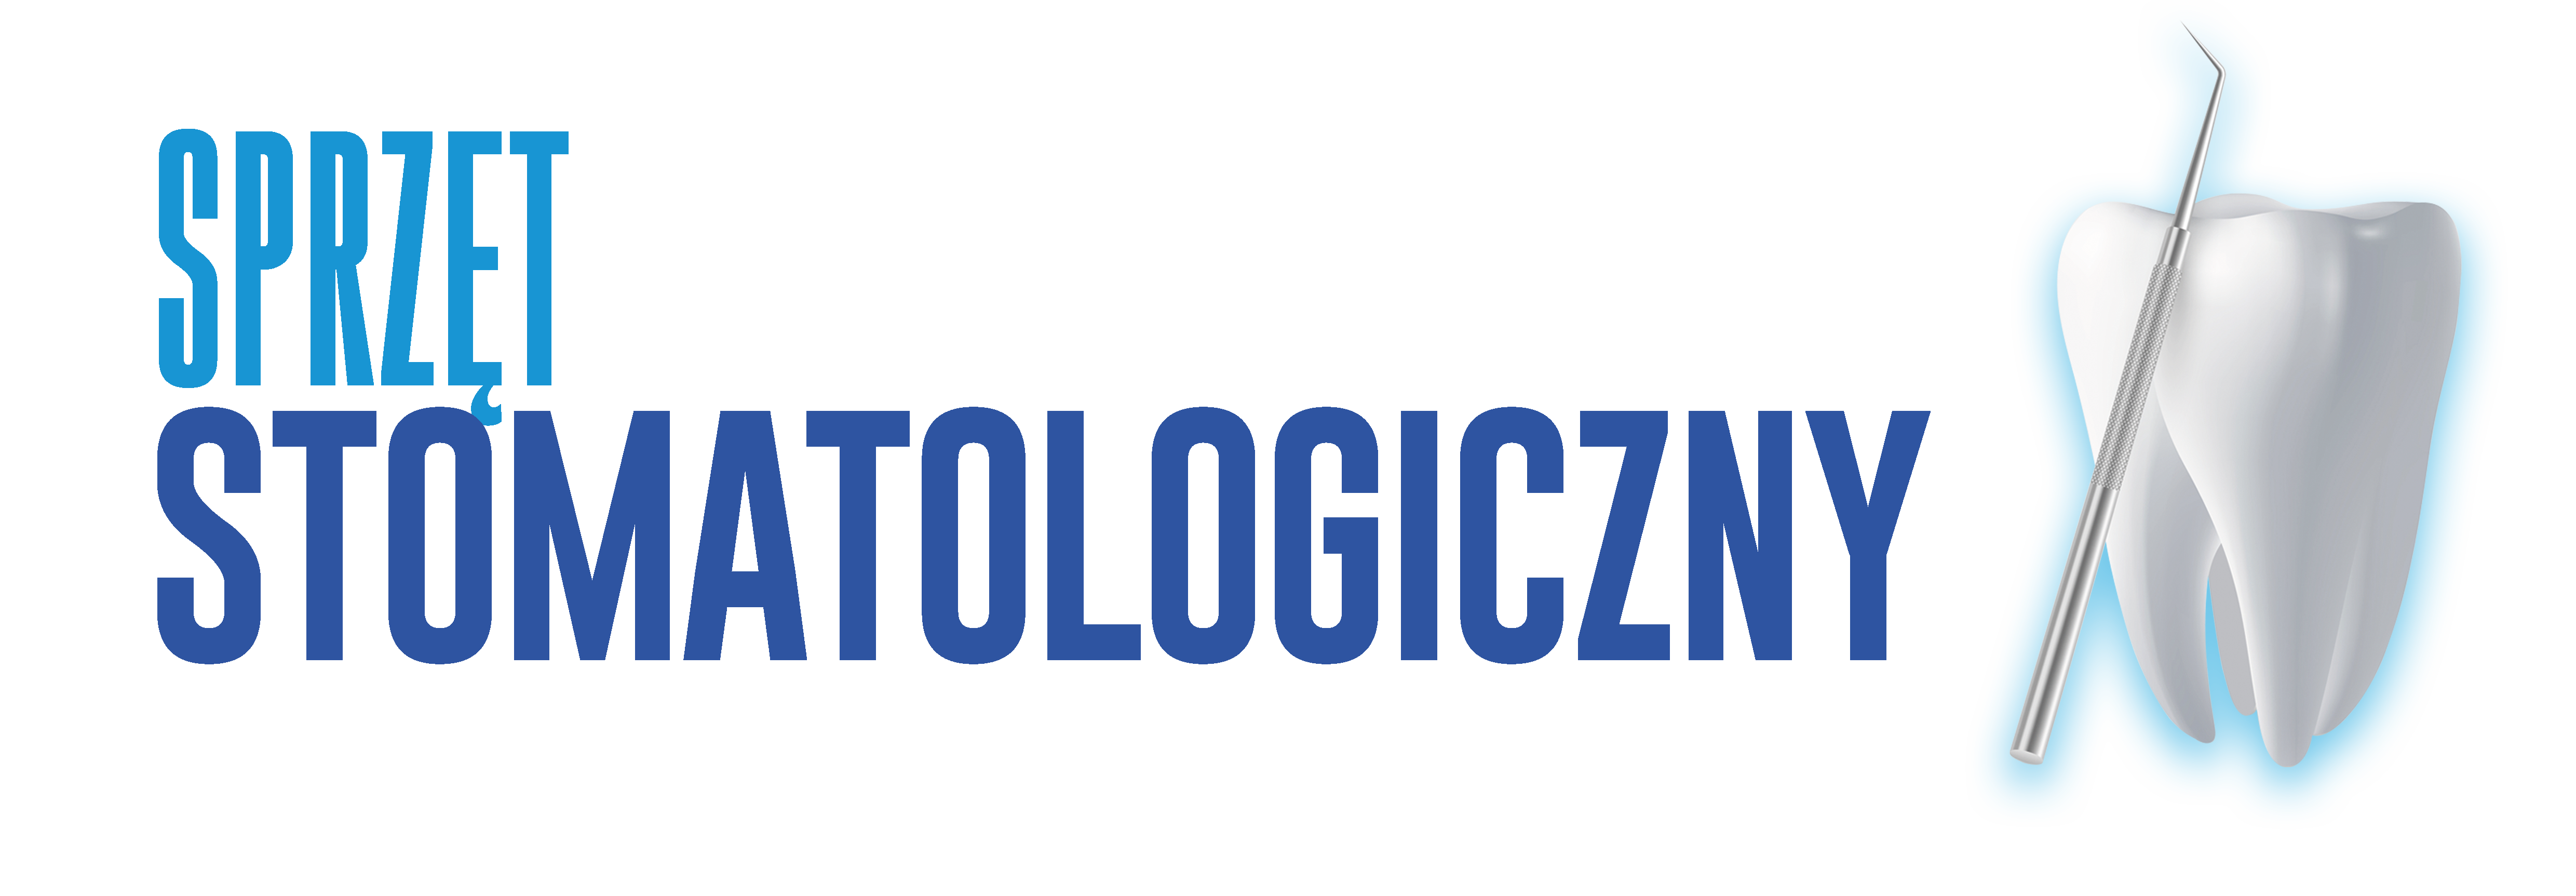 Sprzęt Stomatologiczny Logo